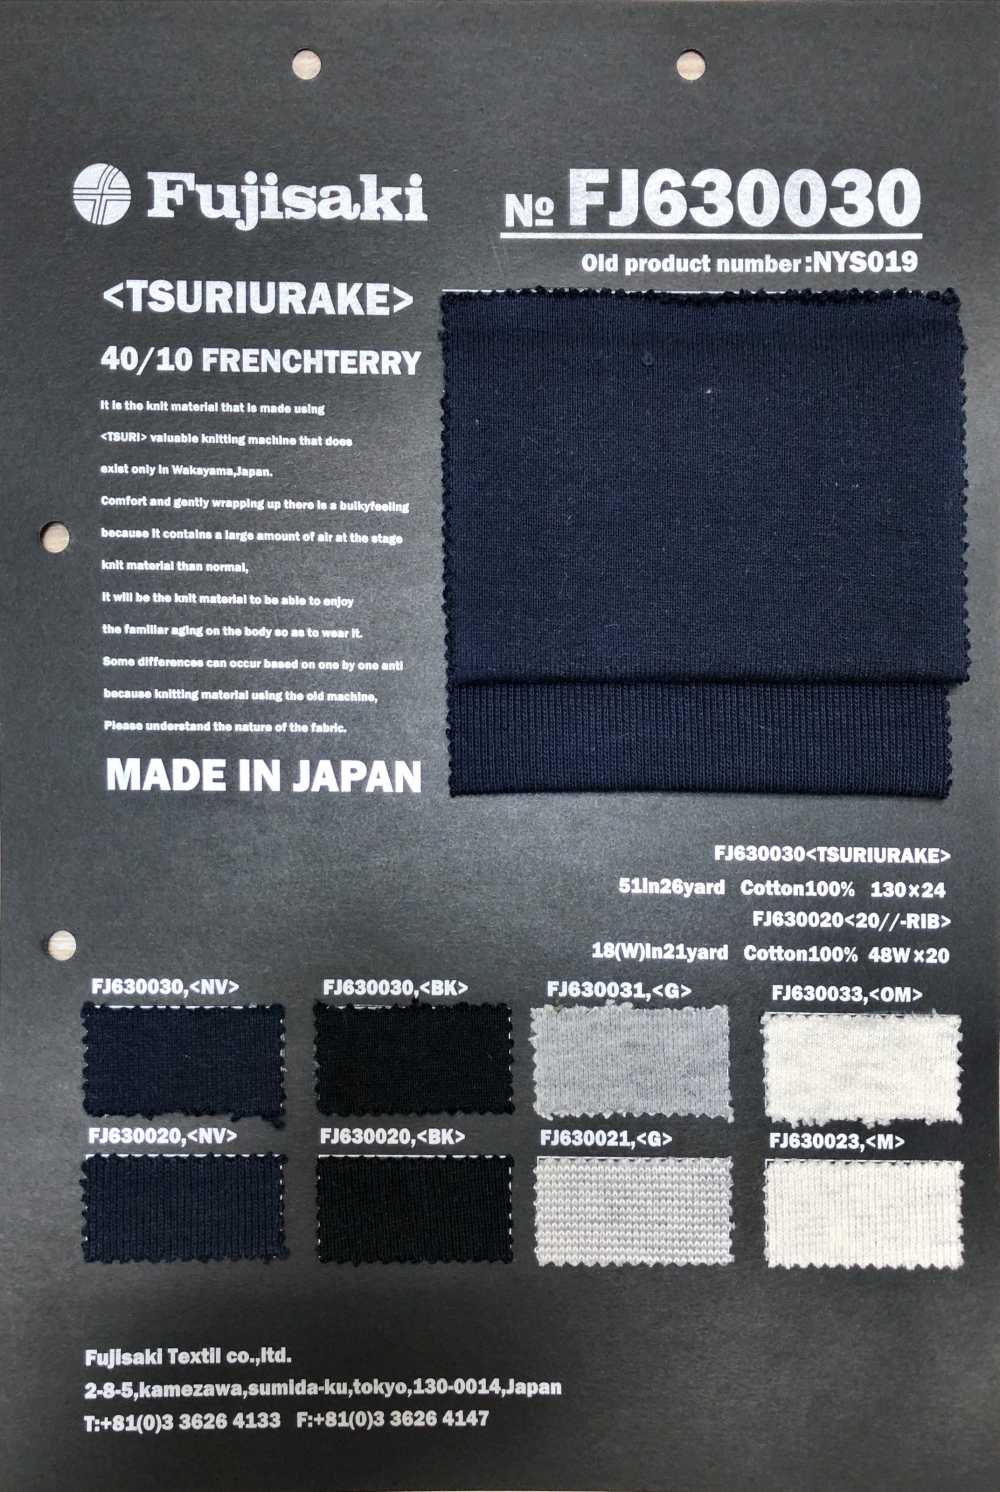 FJ630020 20//- Vải Rib Fujisaki Textile